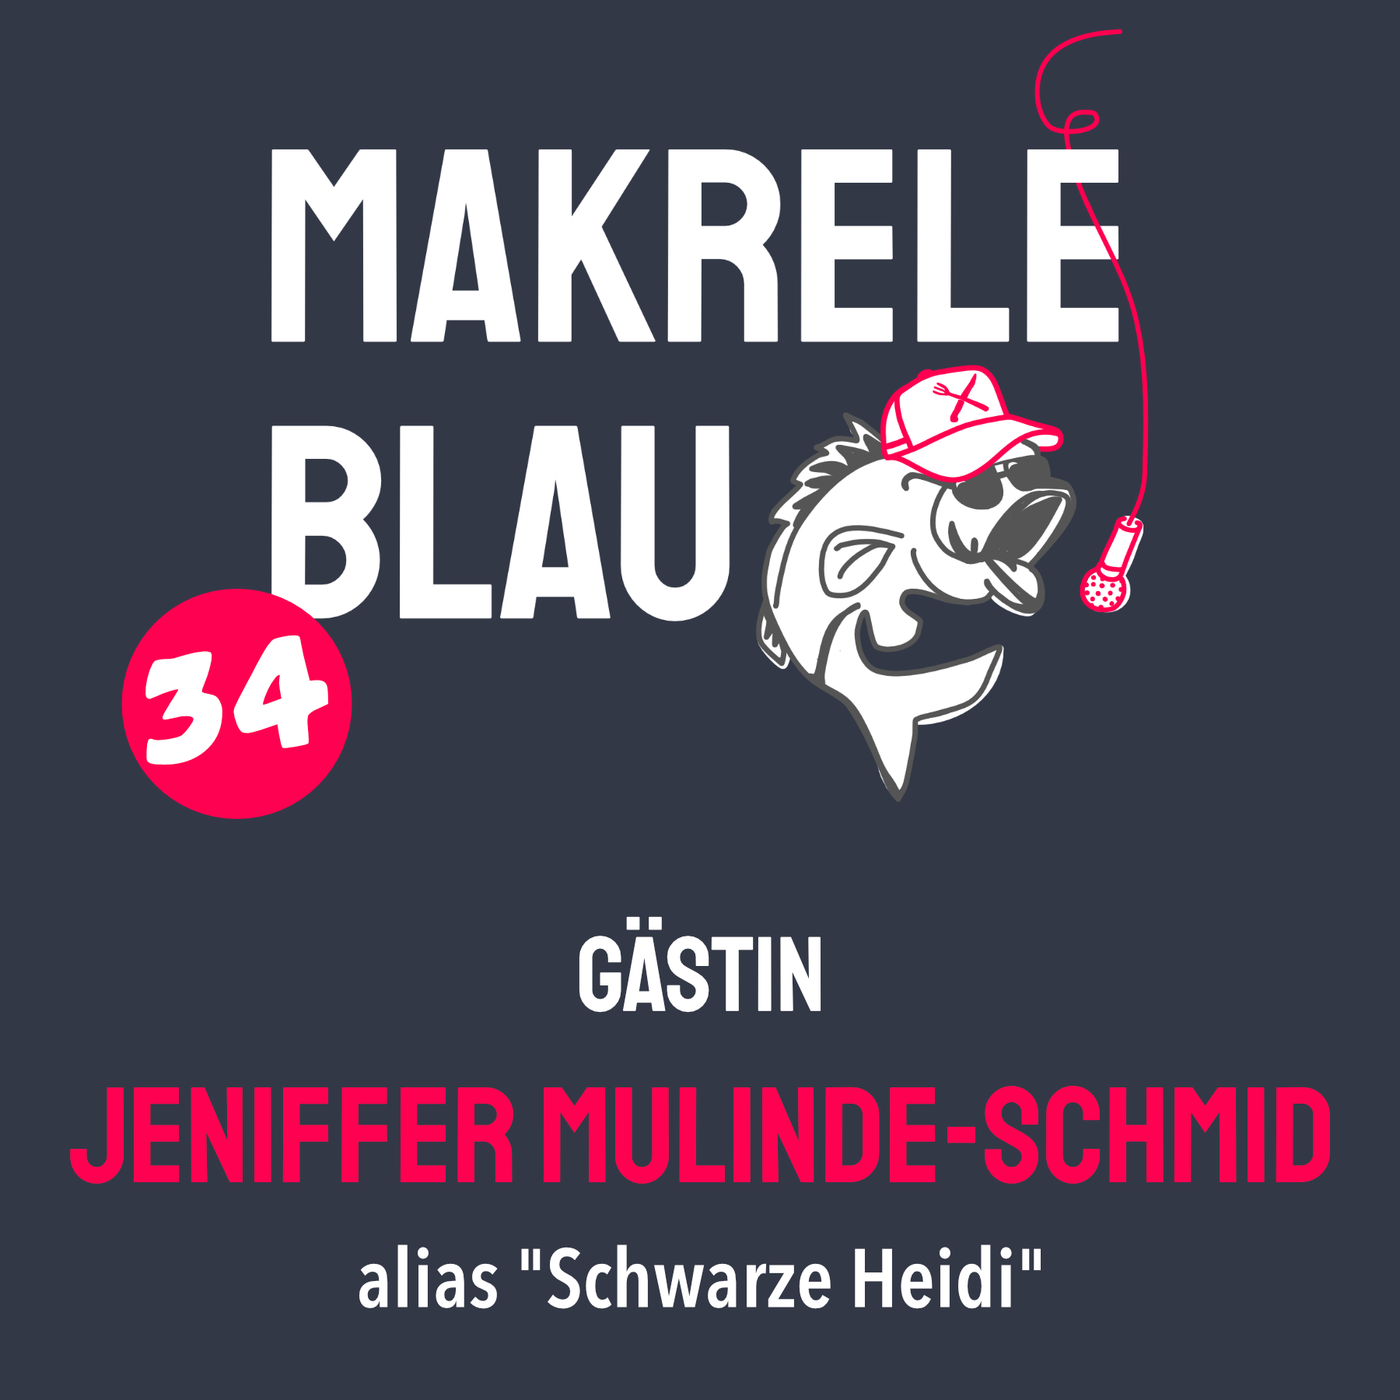 Makrele Blau #34 – Grüsse aus Berlin, mit dä Jeniffer Mulinde-Schmid